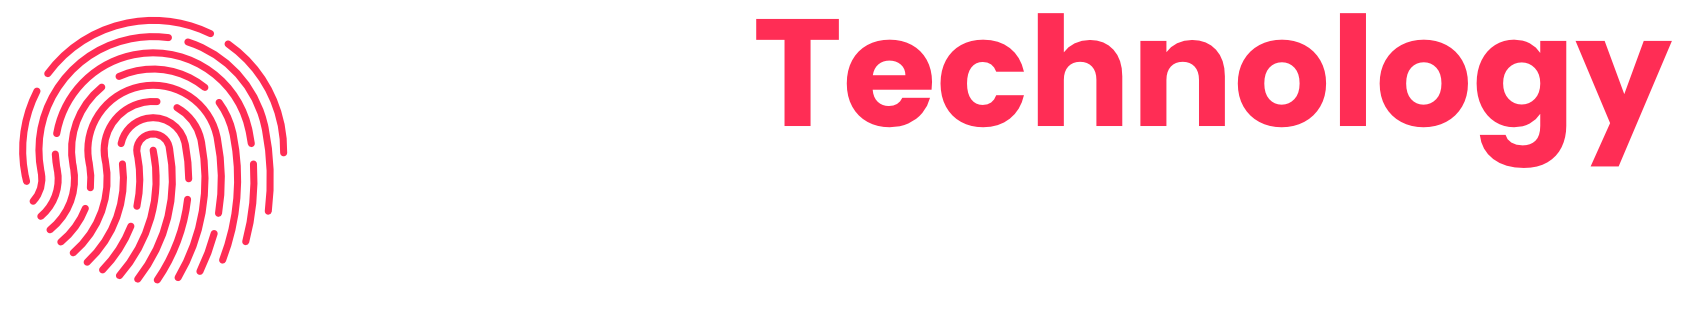 Budd Technology Services Logo